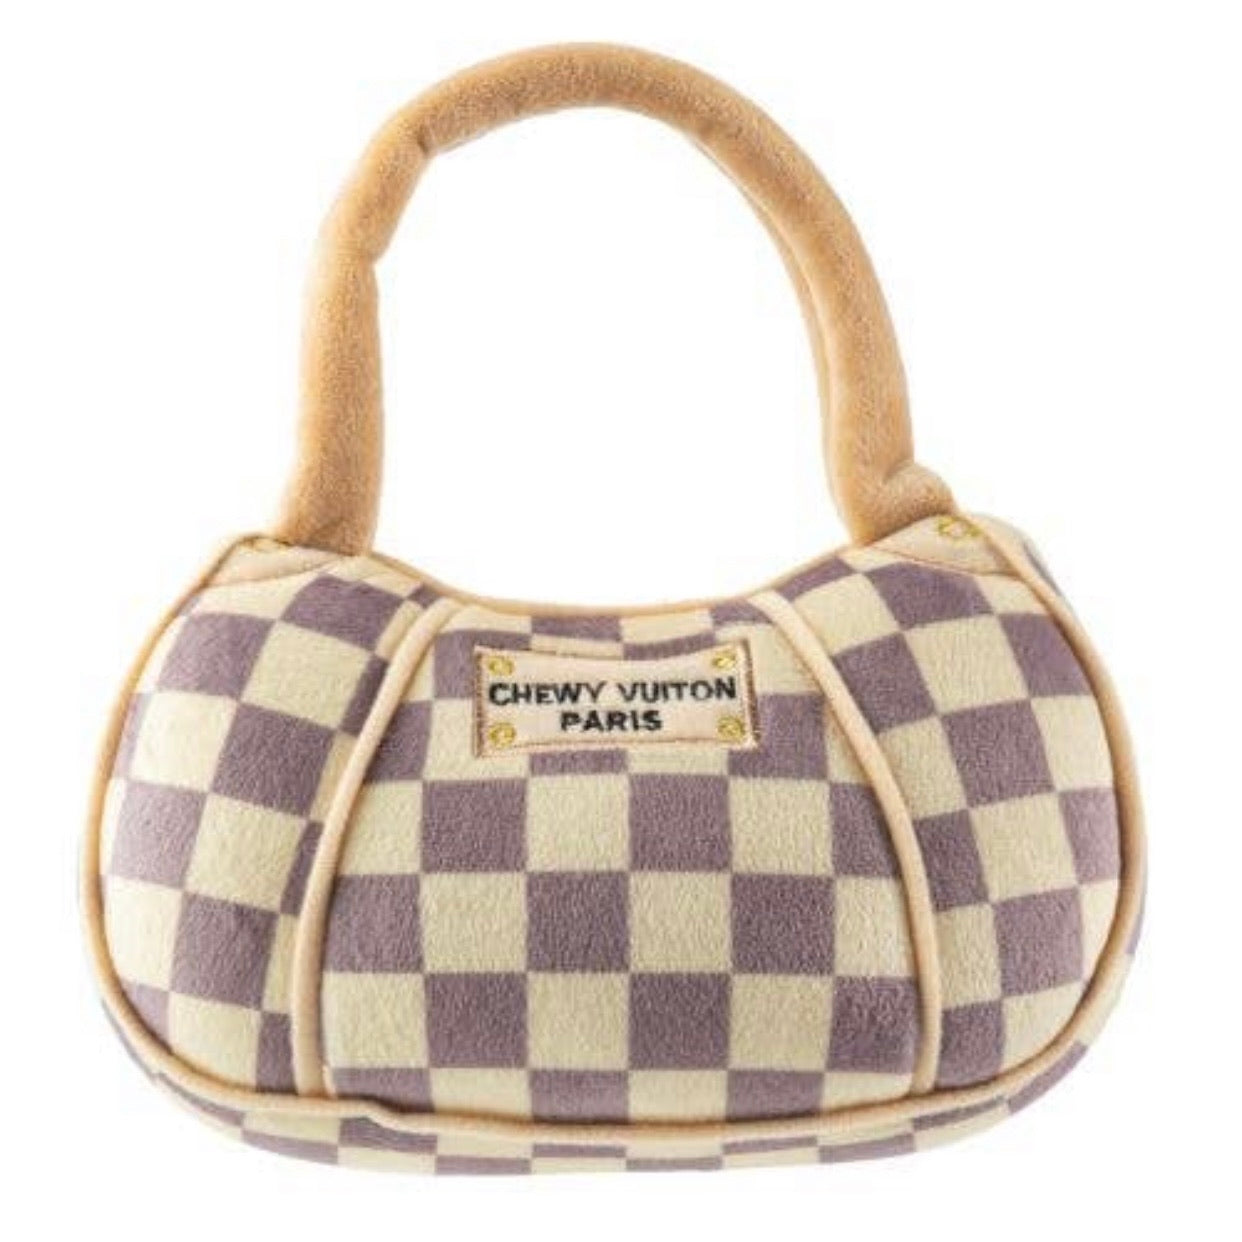 Chewy Vuiton Checker Handbag Plush Dog Toy